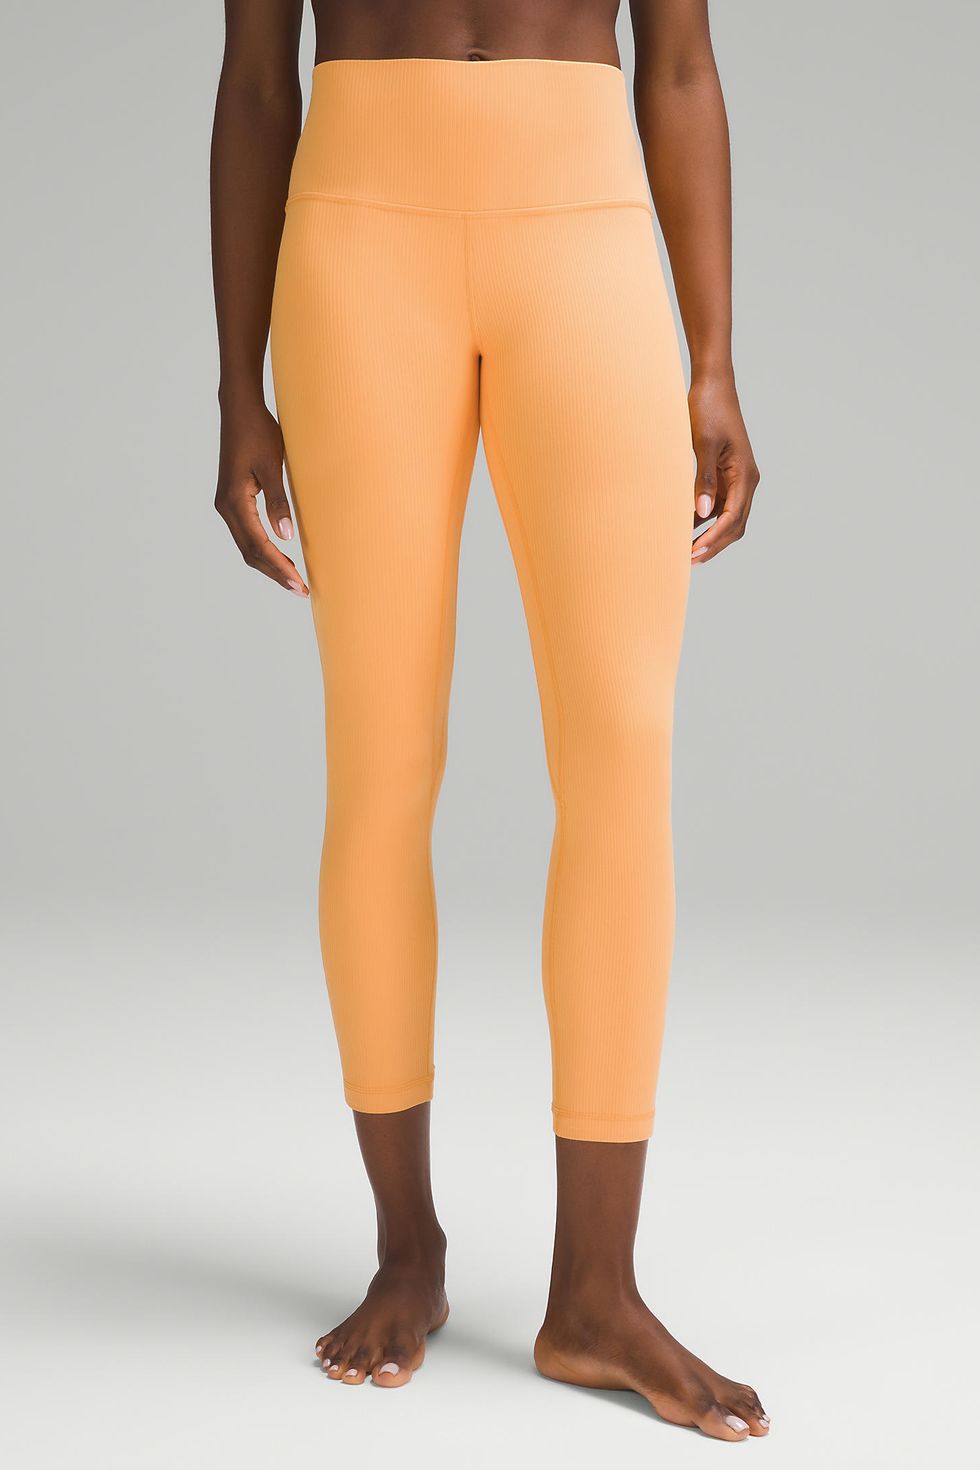 Lululemon Womens Leggings Pants Sport Orange Size 6